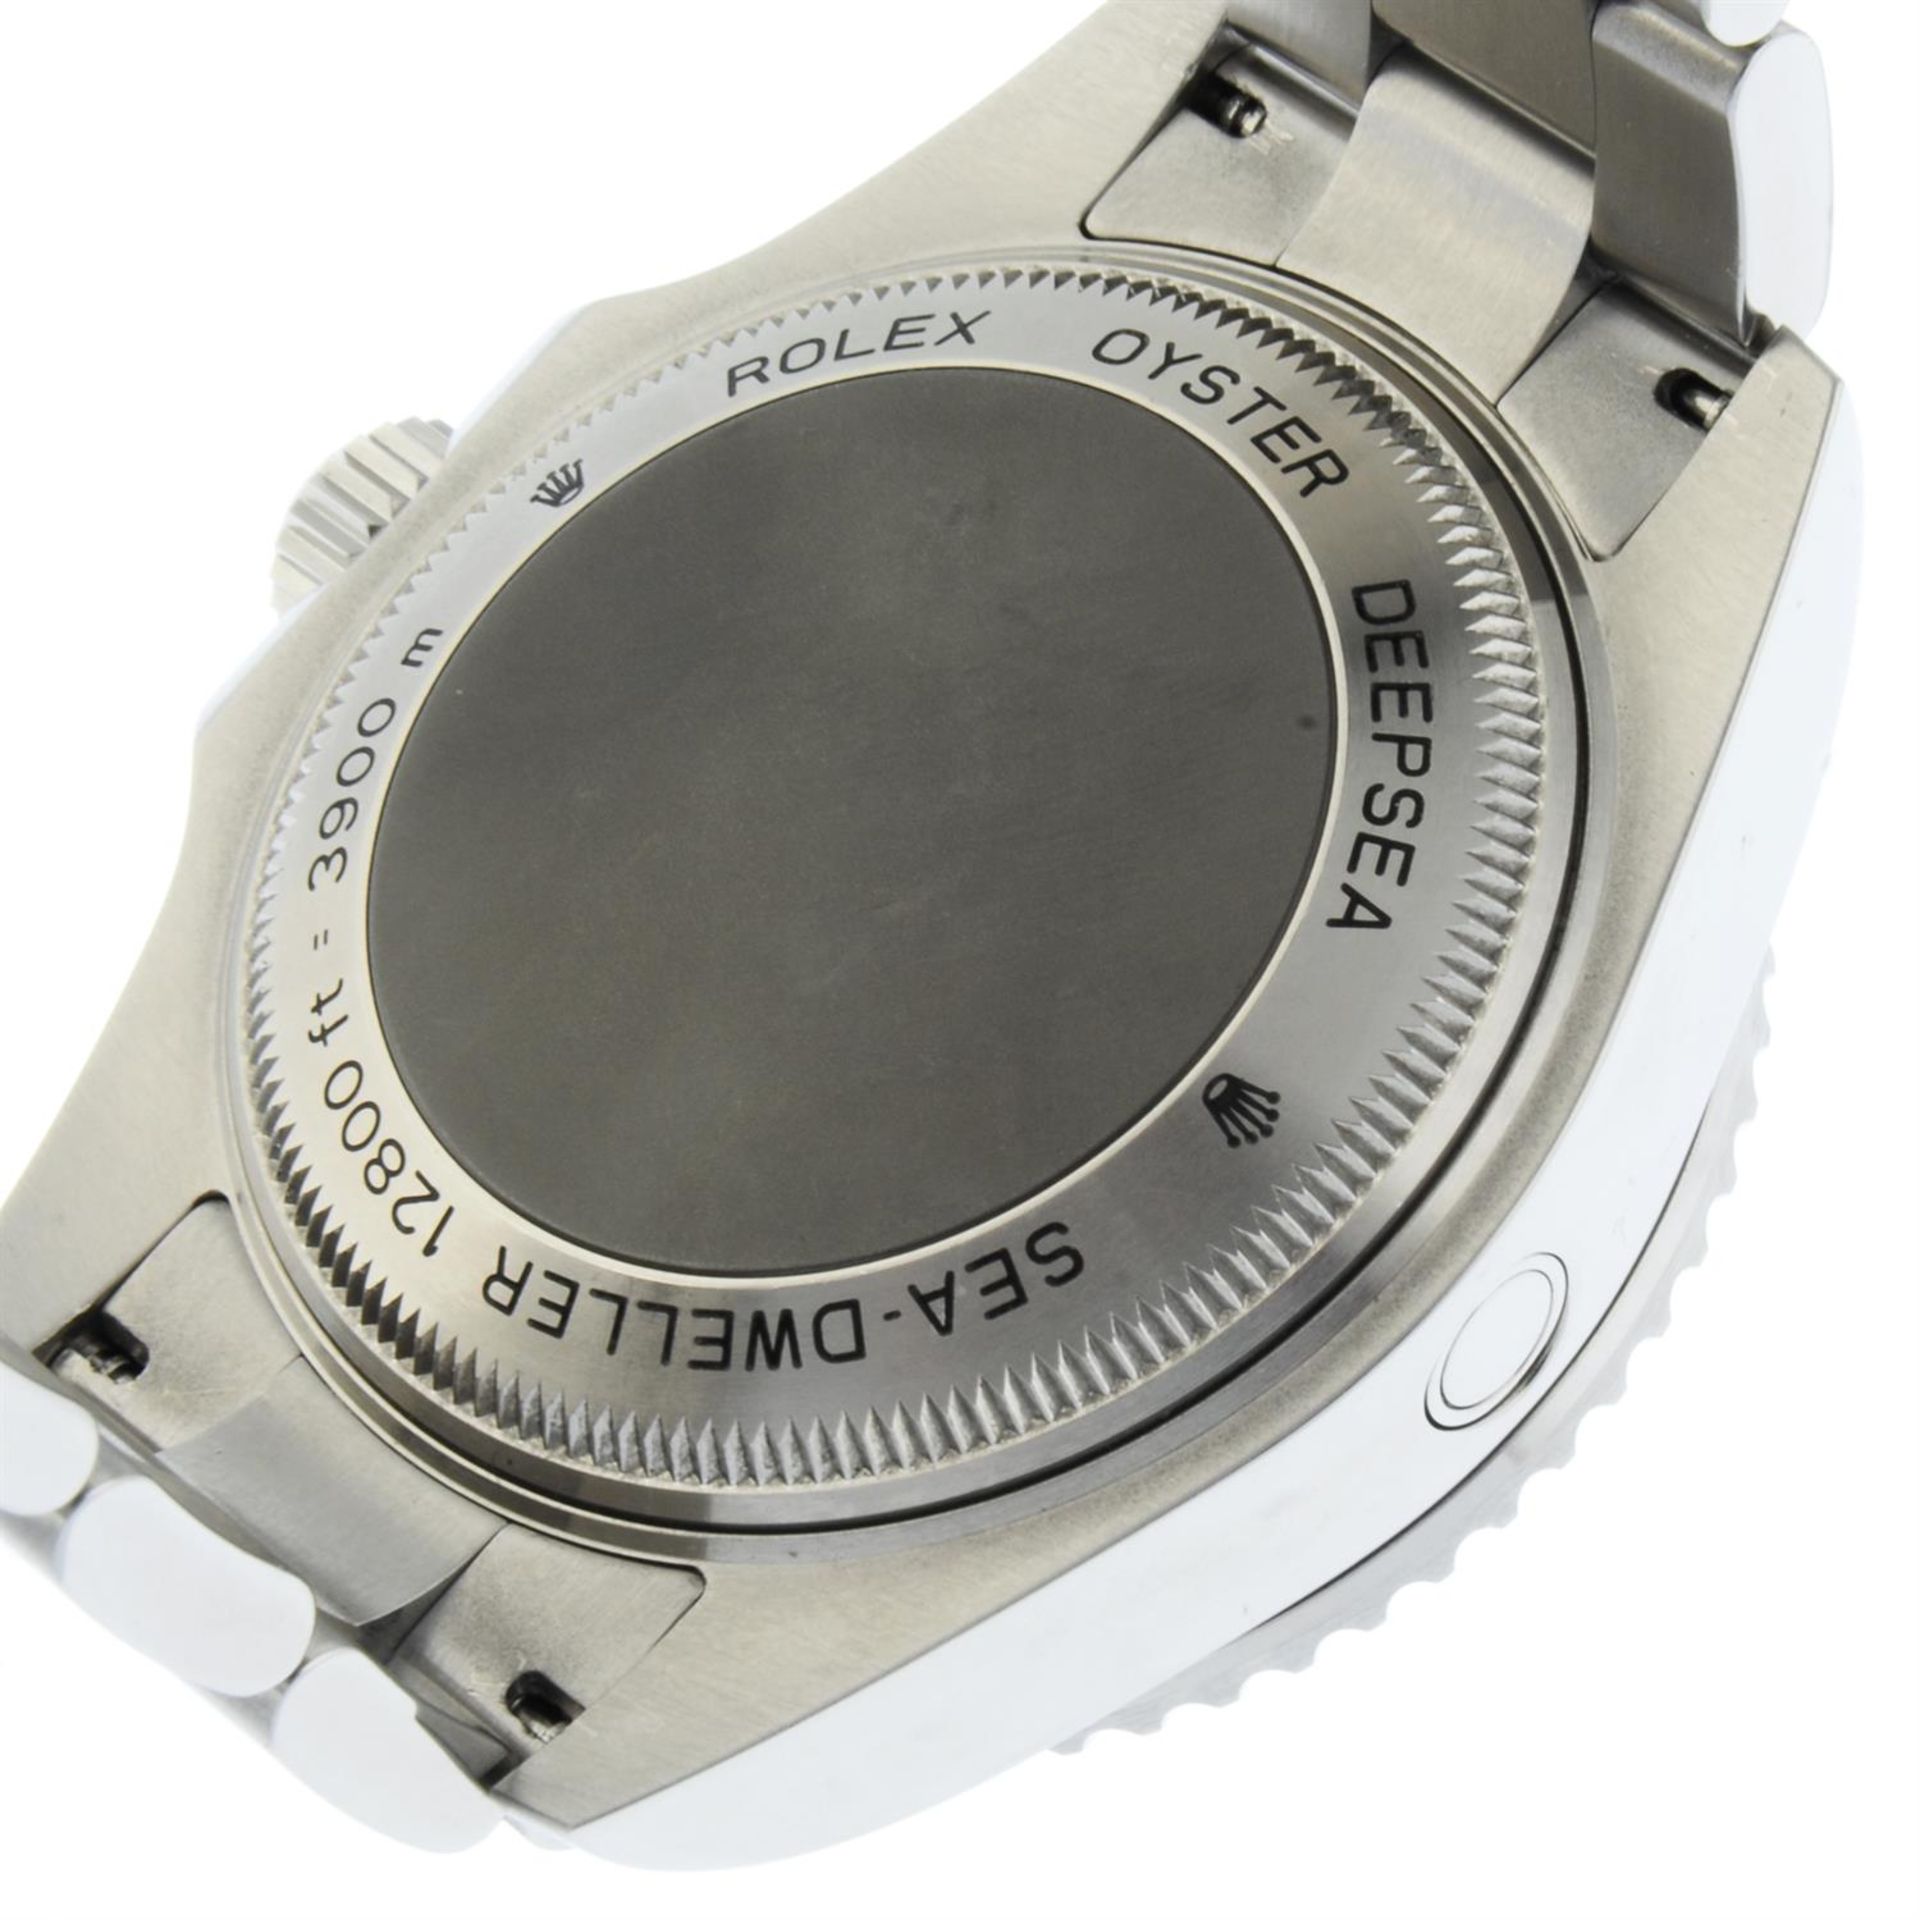 Rolex - an Oyster Perpetual Deepsea Sea-Dweller watch, 43mm. - Image 4 of 4